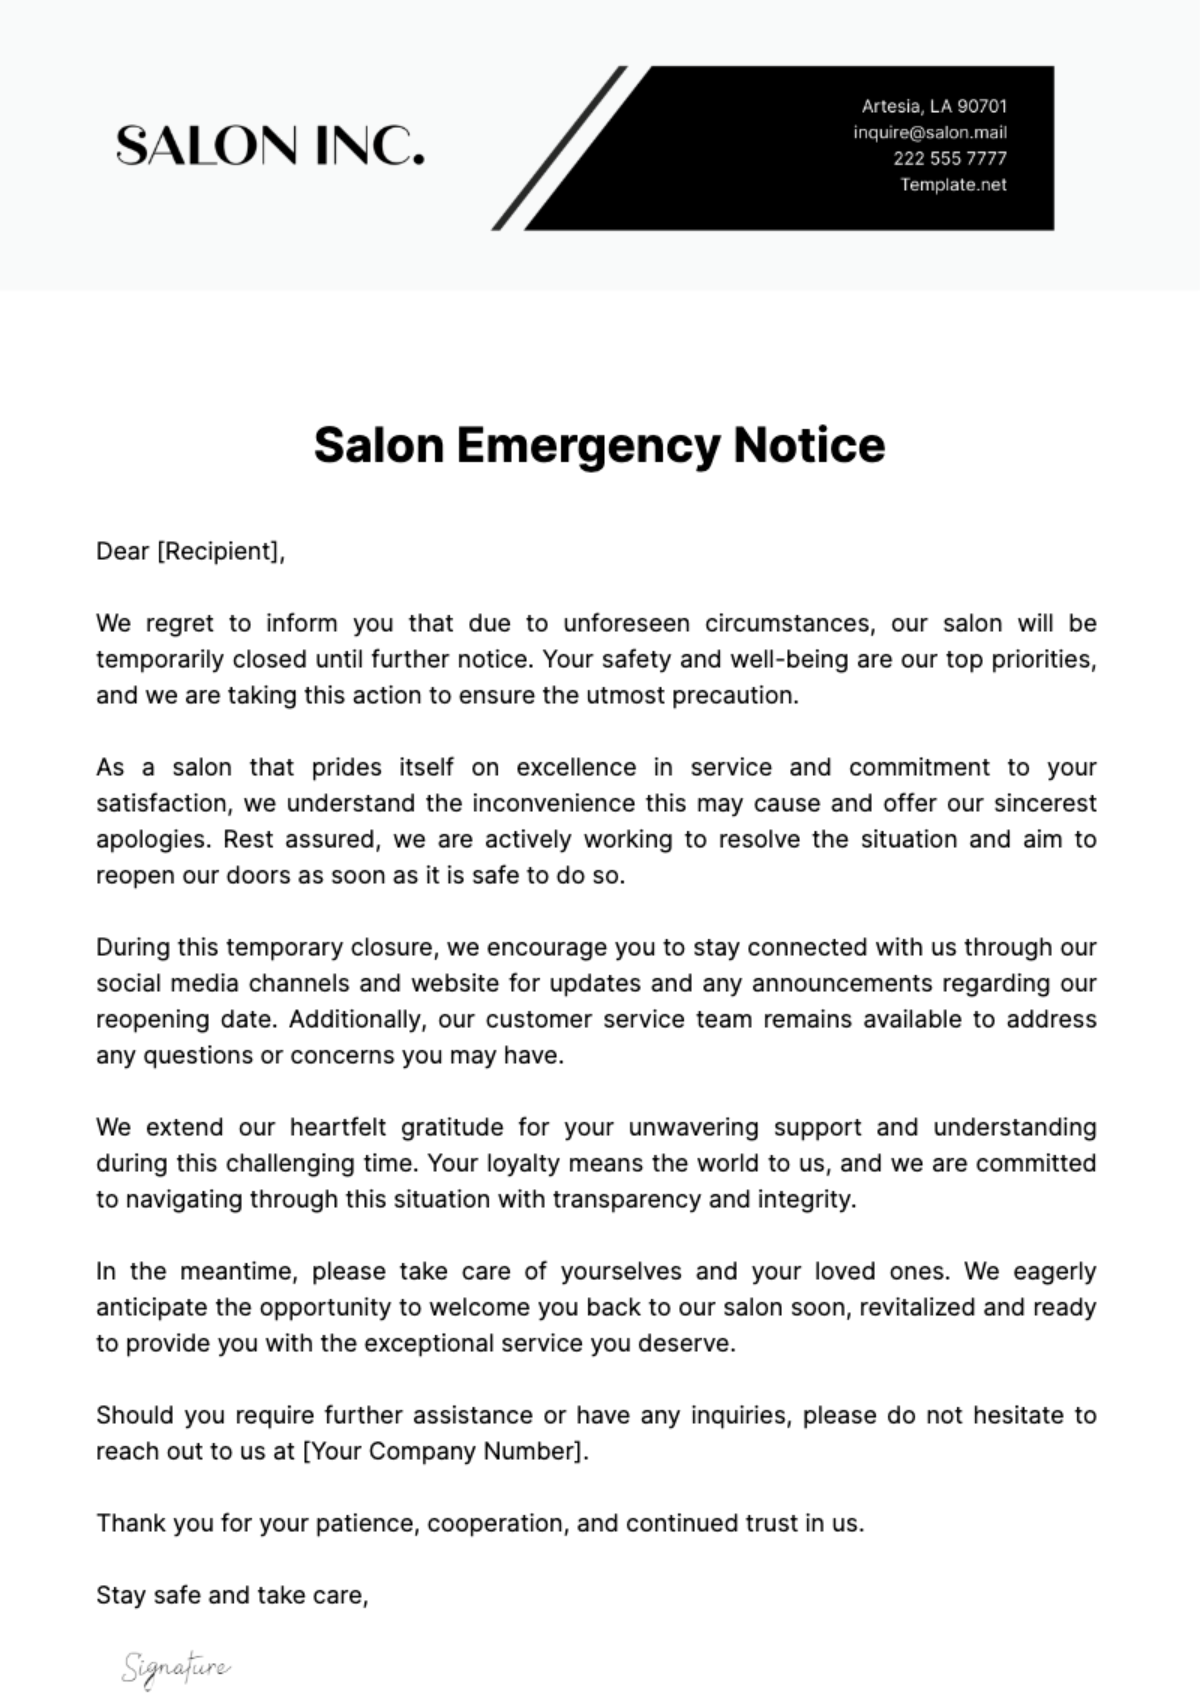 Salon Emergency Notice Template